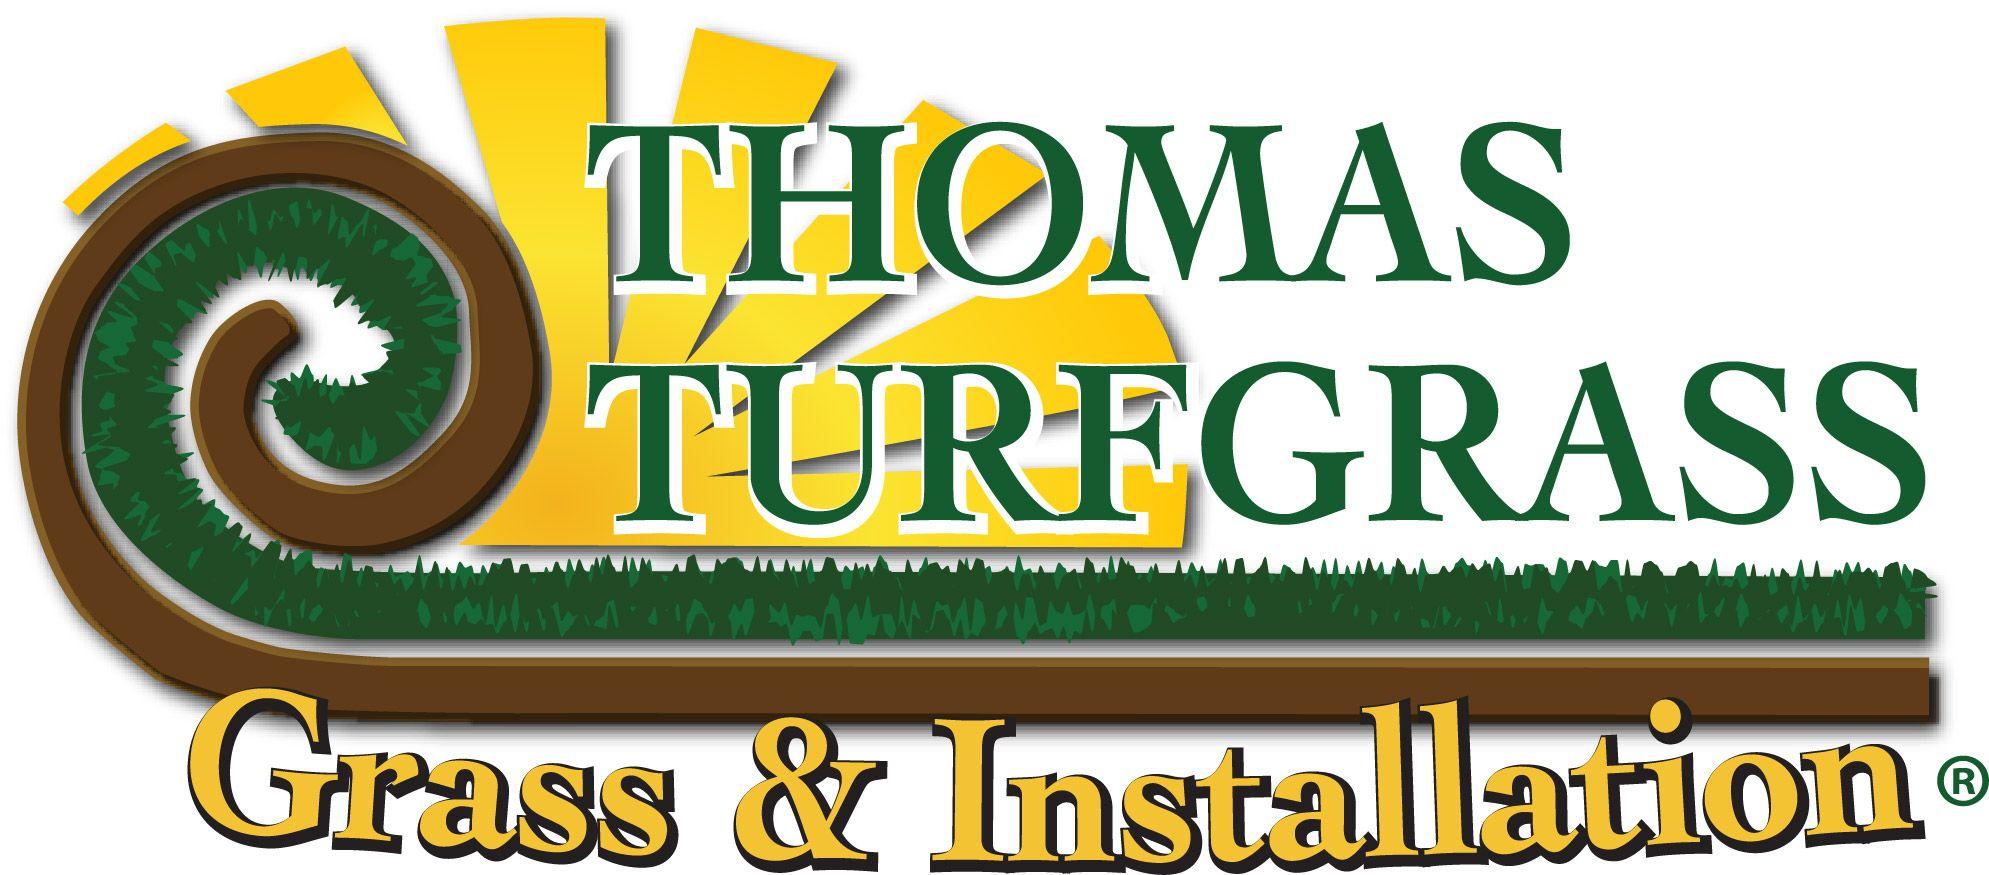 Turfgrass Logo - Thomas Turfgrass Logo F6 - West Texas Chapter GCSAA